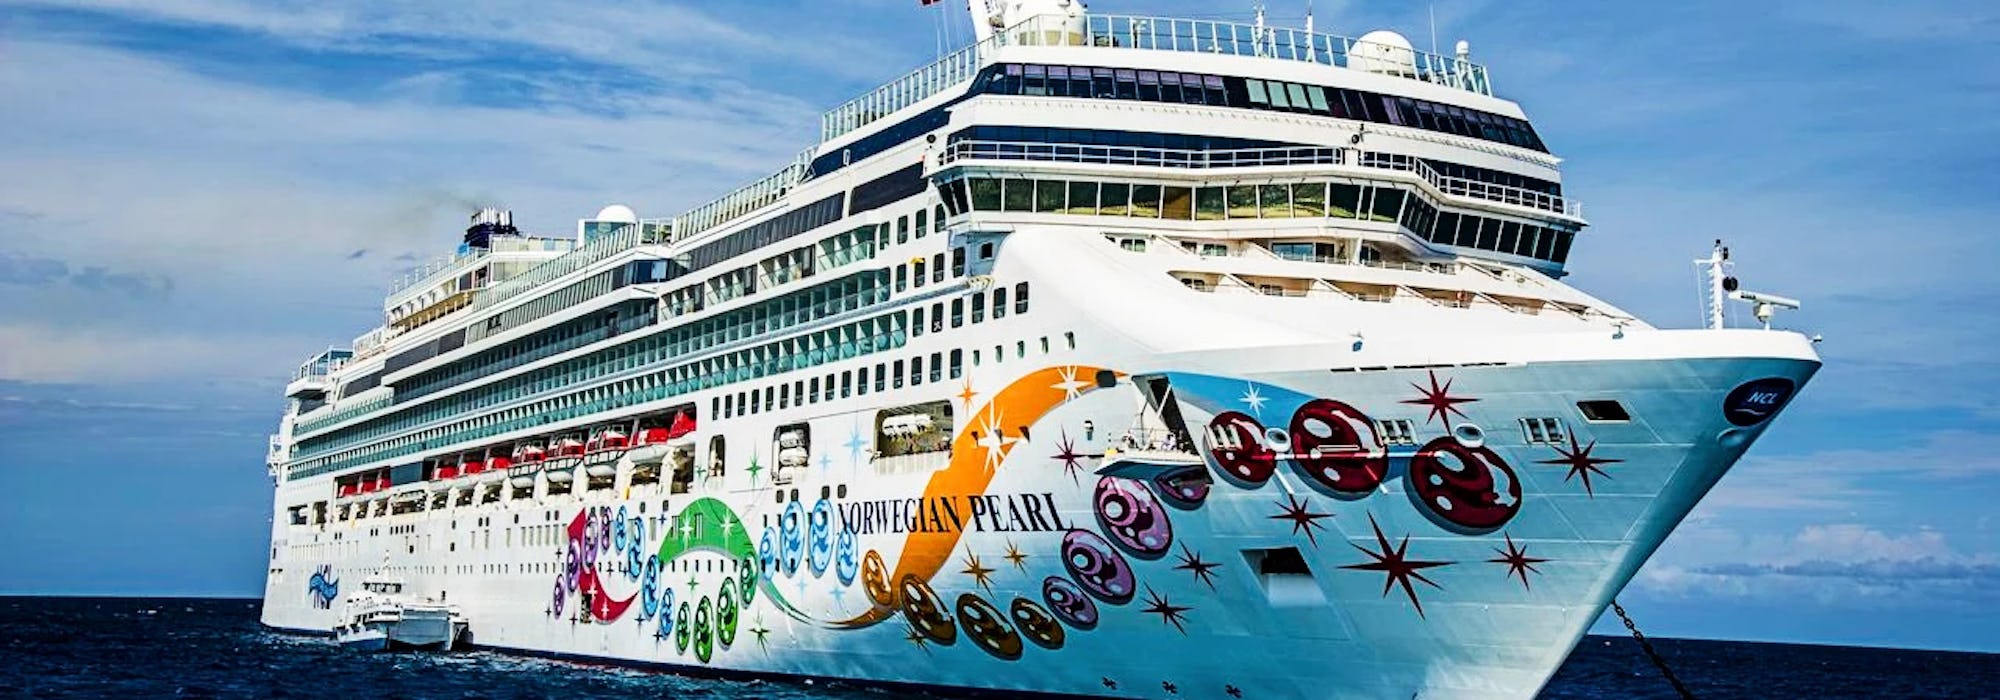 Norwegian Pearl - Norwegian Cruise Line